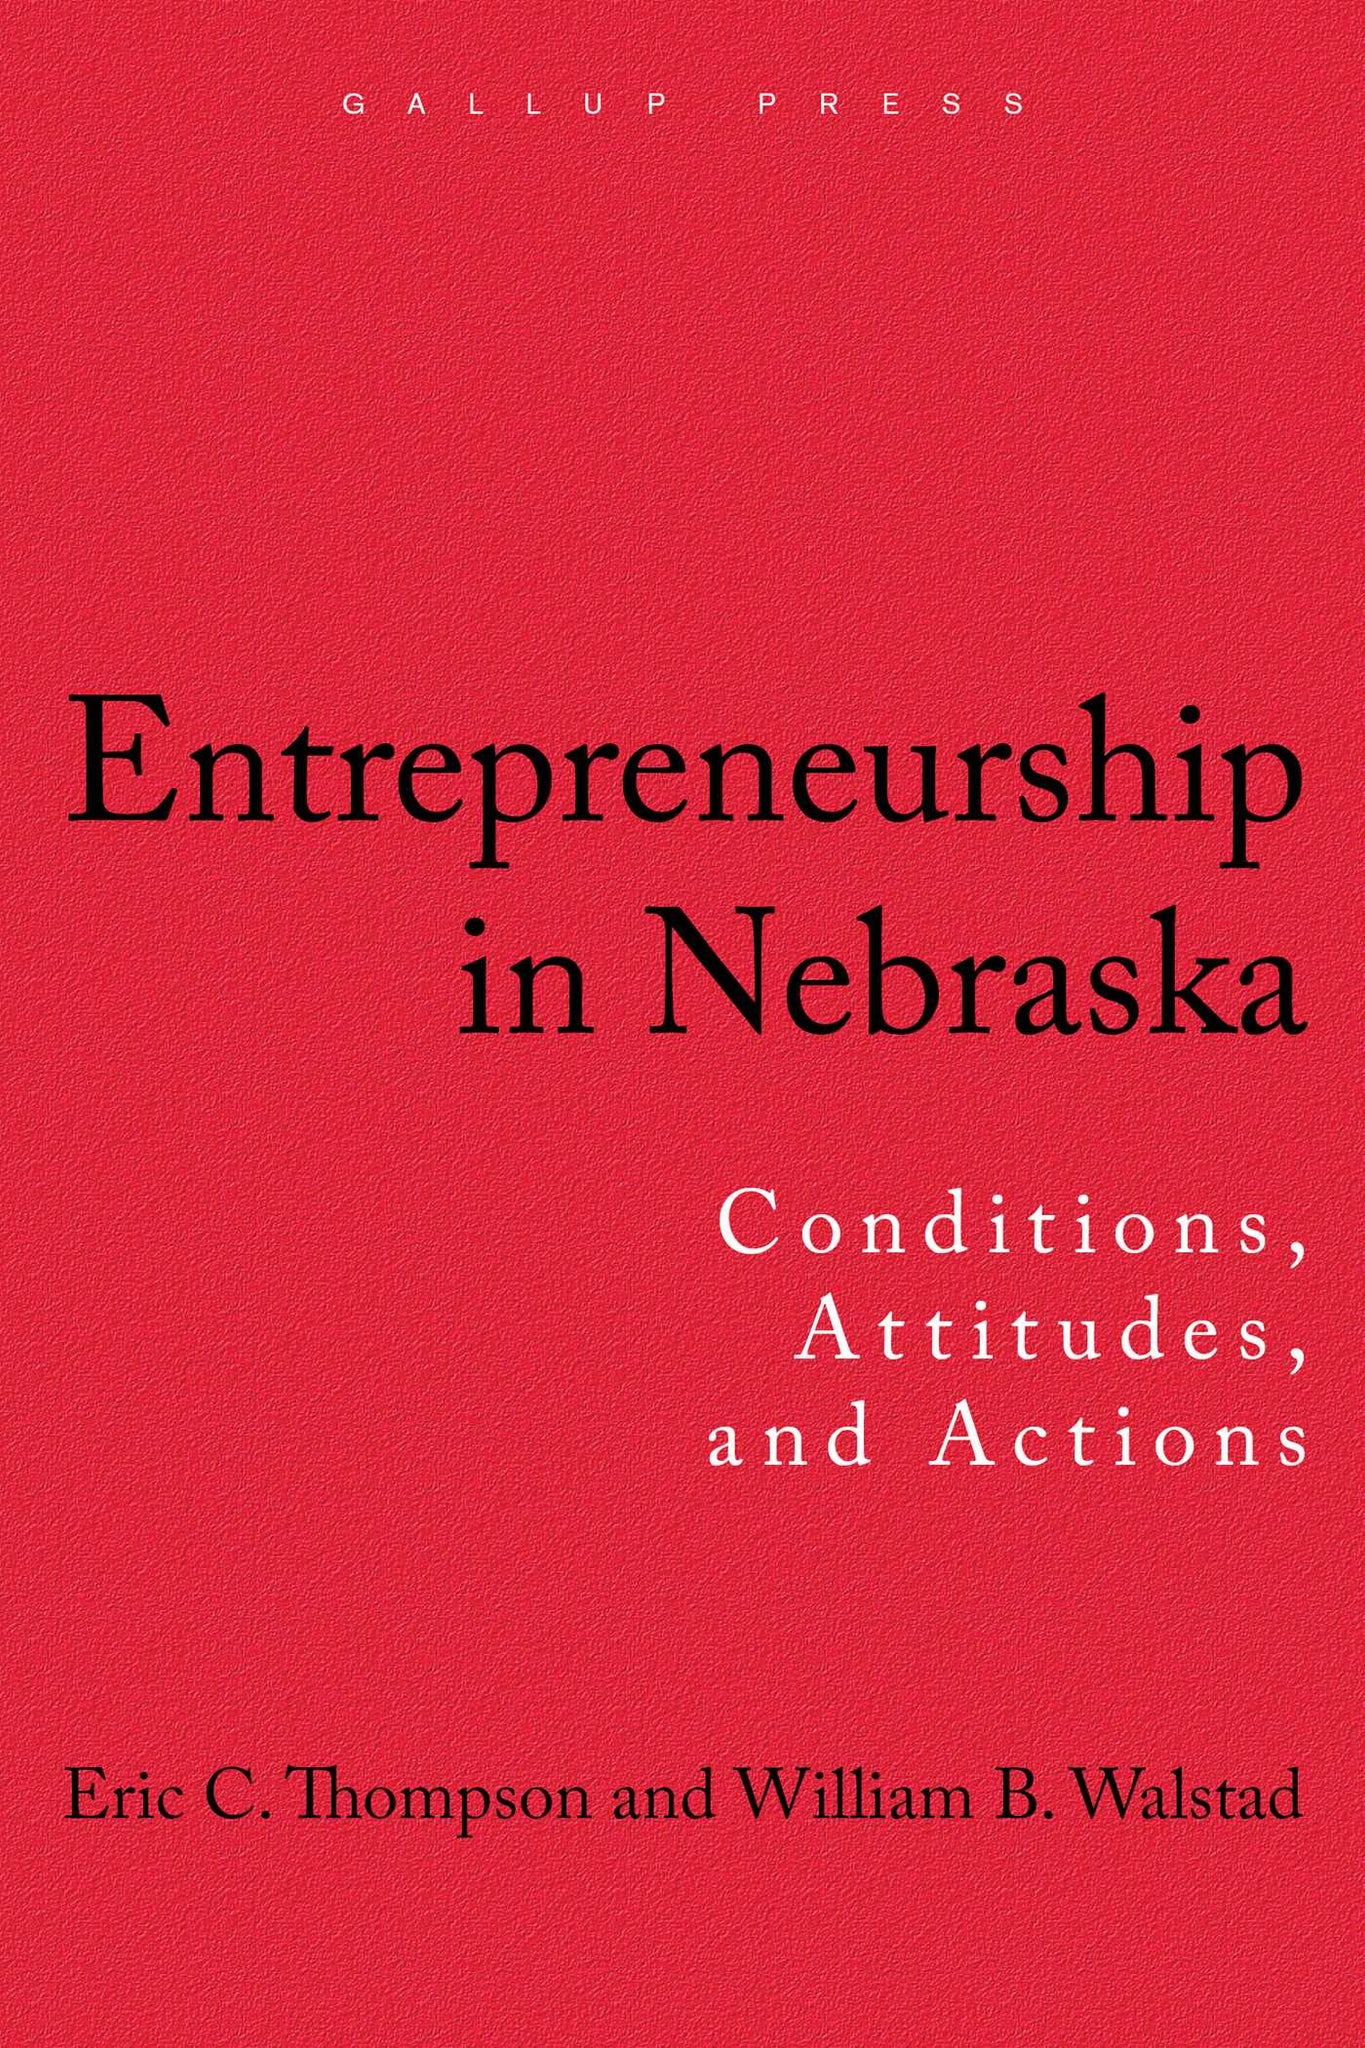 Entrepreneurship in Nebraska : Conditions, Attitudes, and Actions